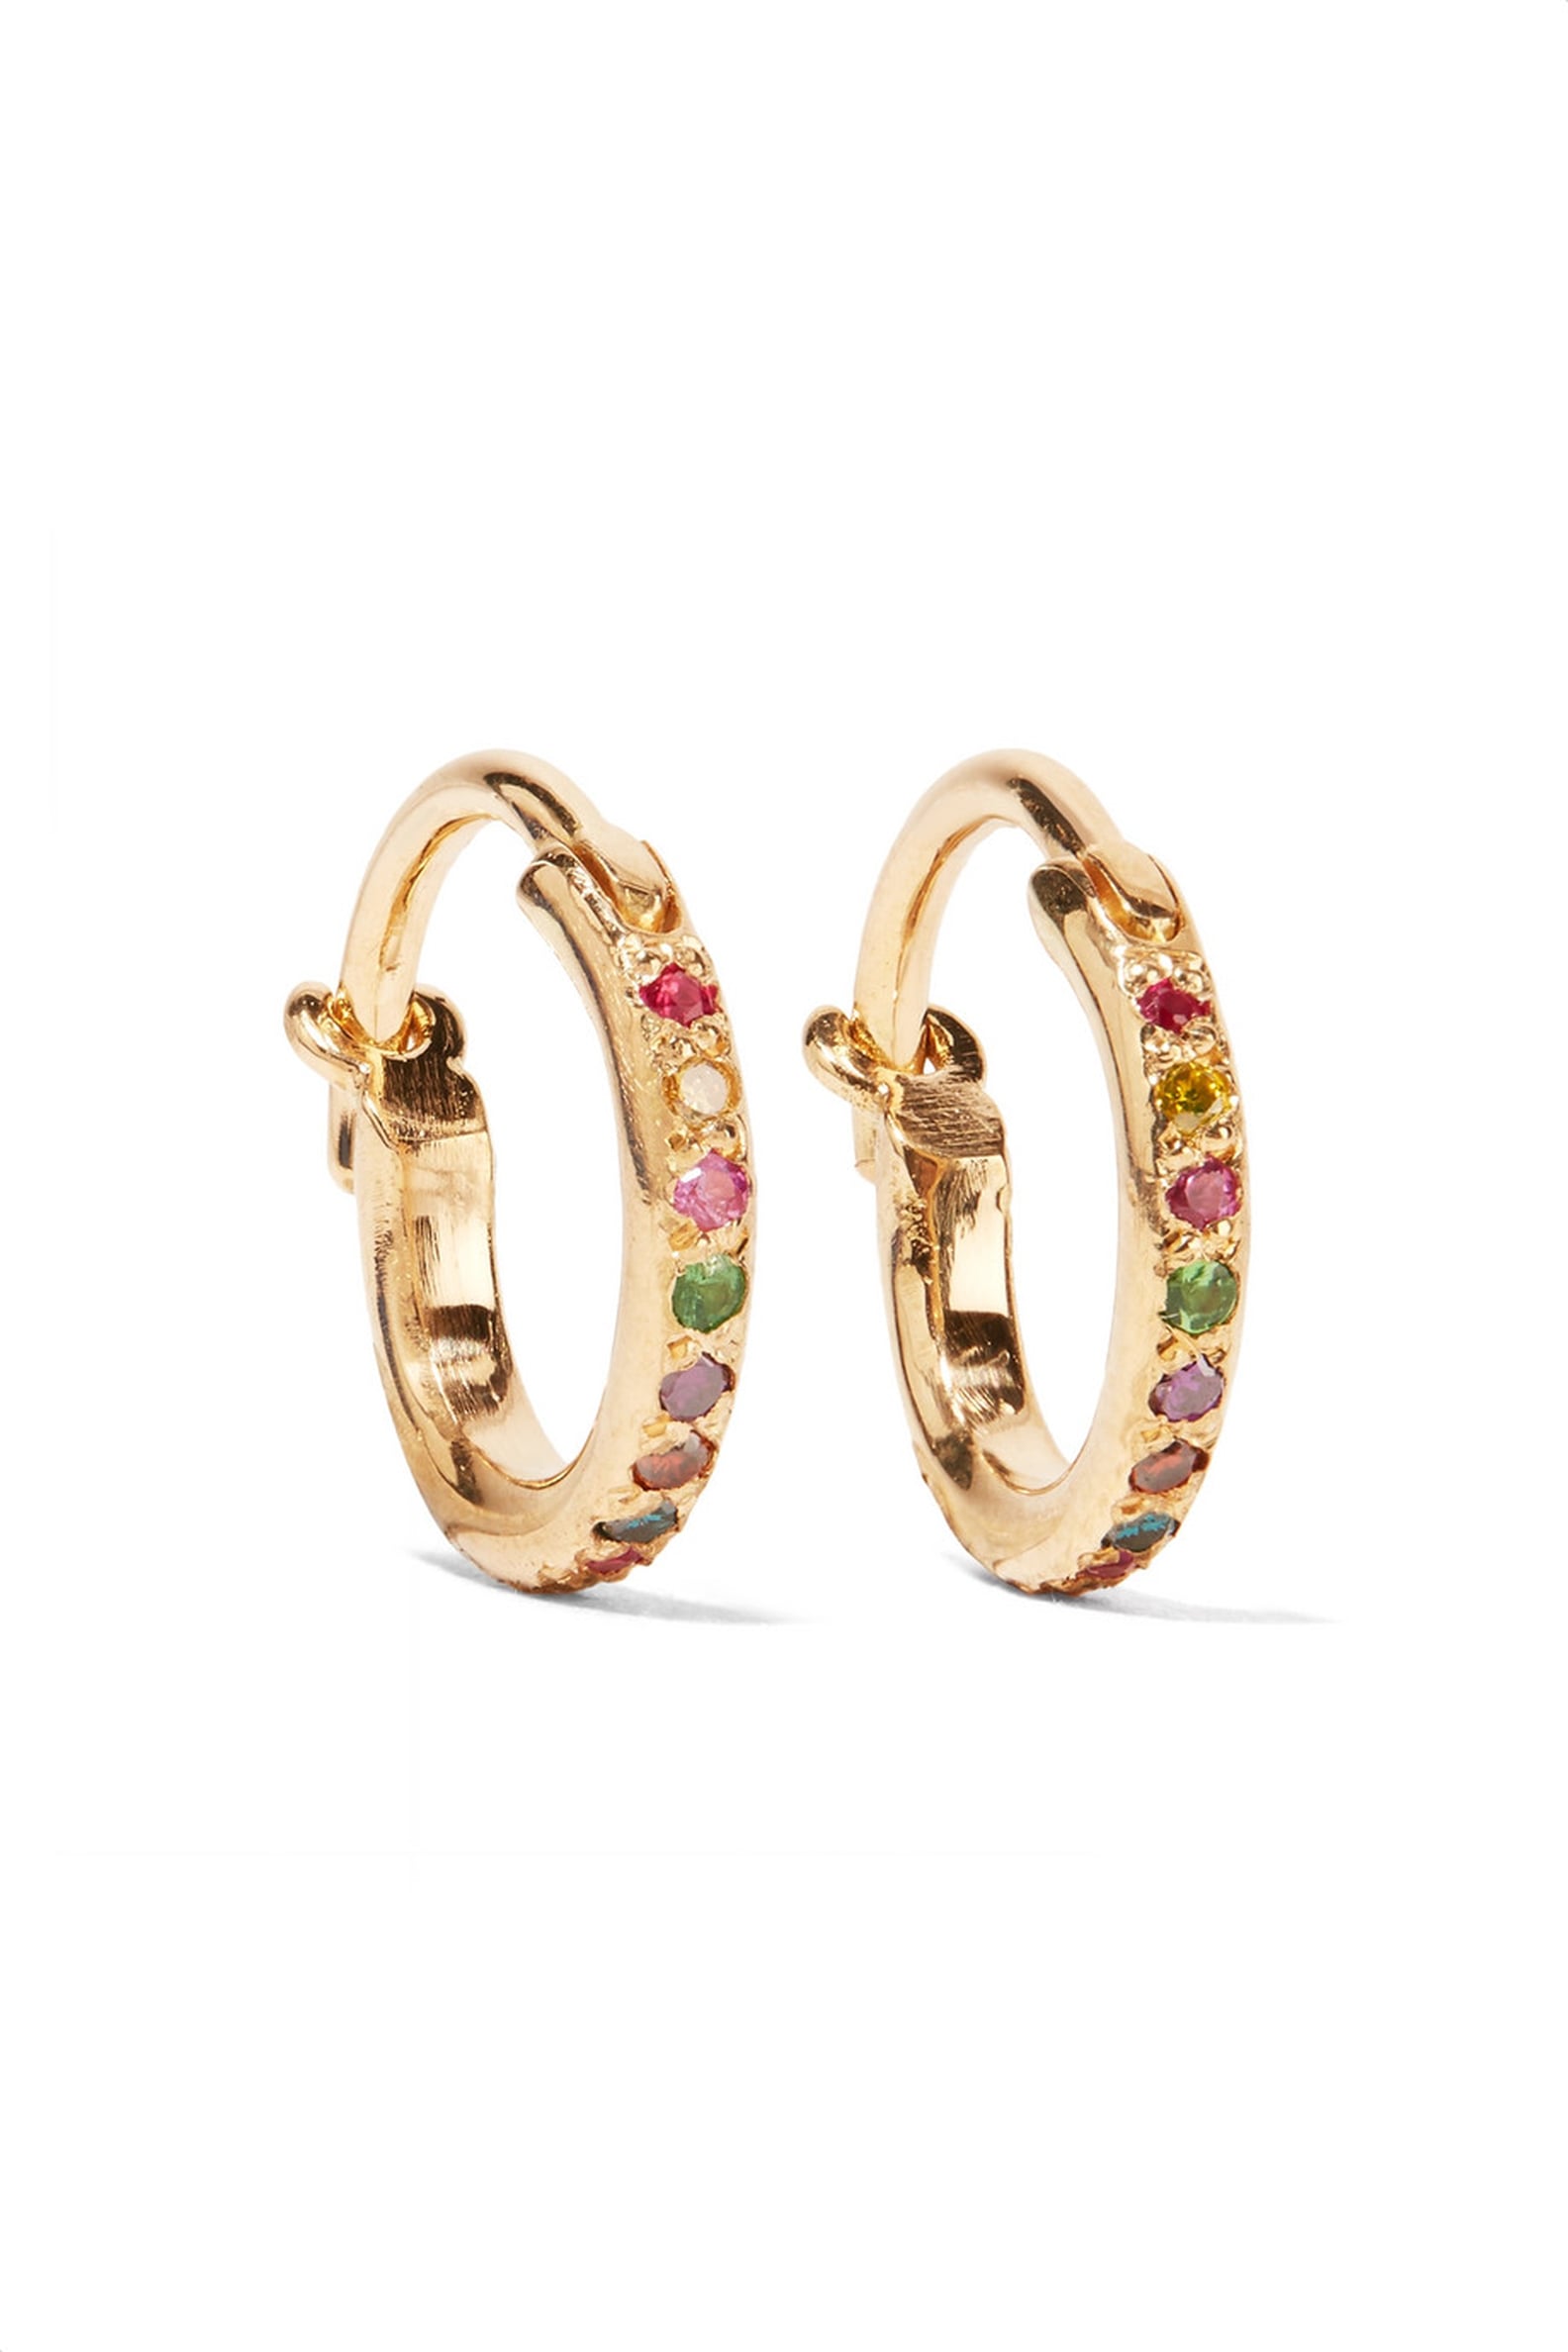 Rainbow Gemstone Jewelry | POPSUGAR Fashion